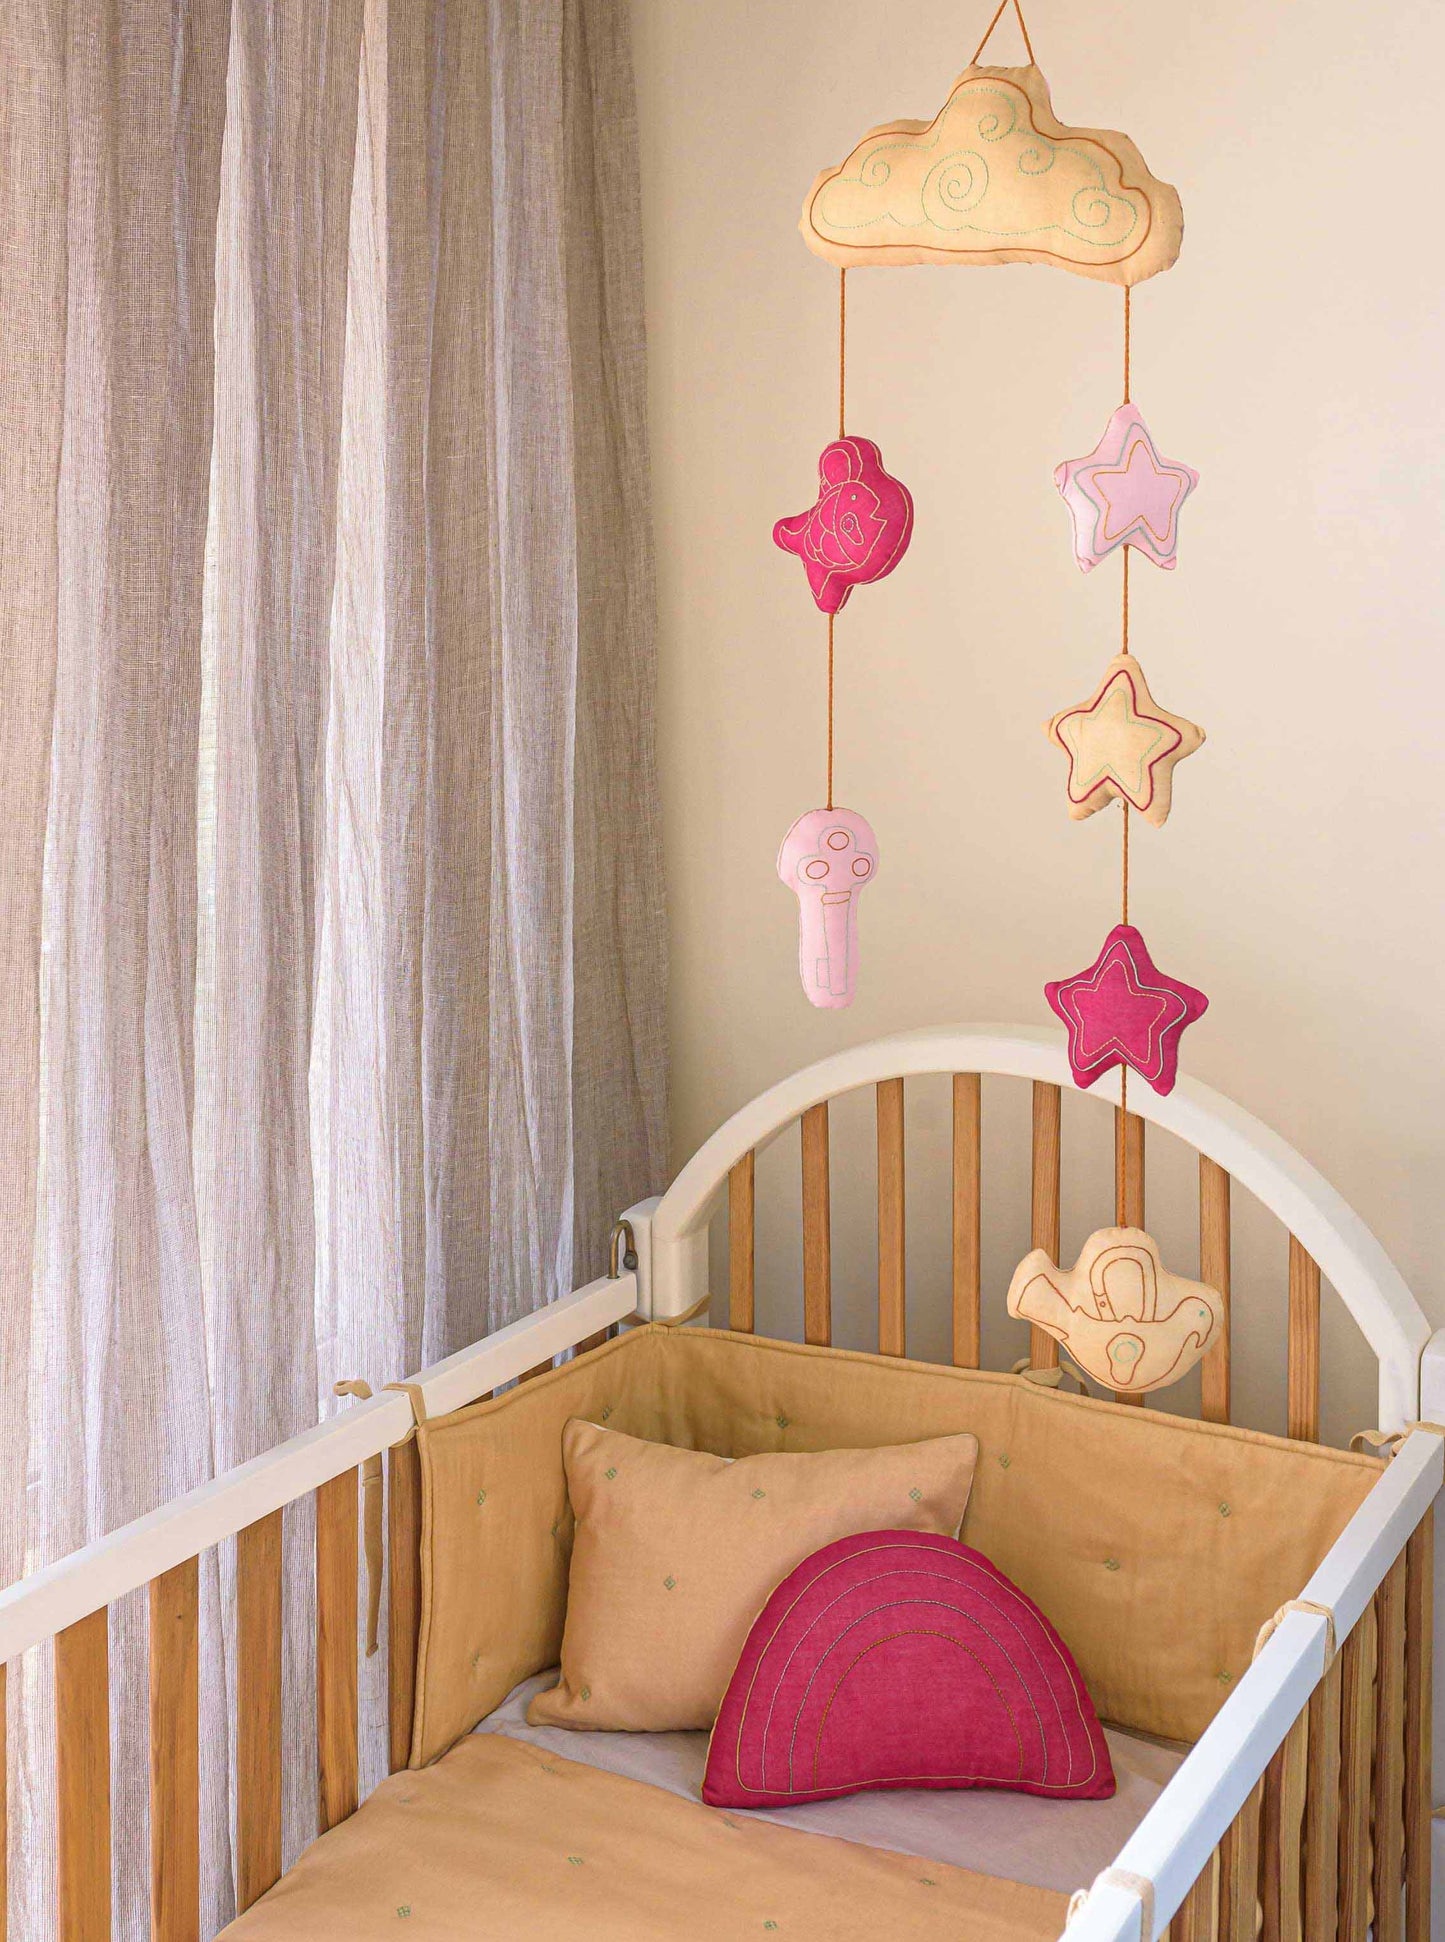 Fuchsia Rainbow decorative kids cushion placed on a baby crib